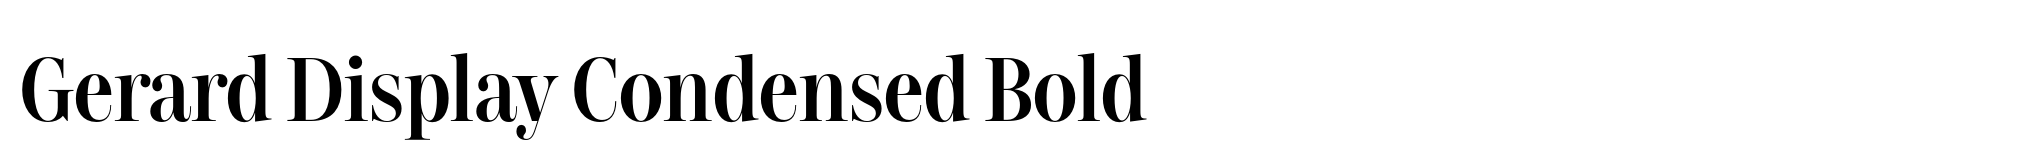 Gerard Display Condensed Bold image